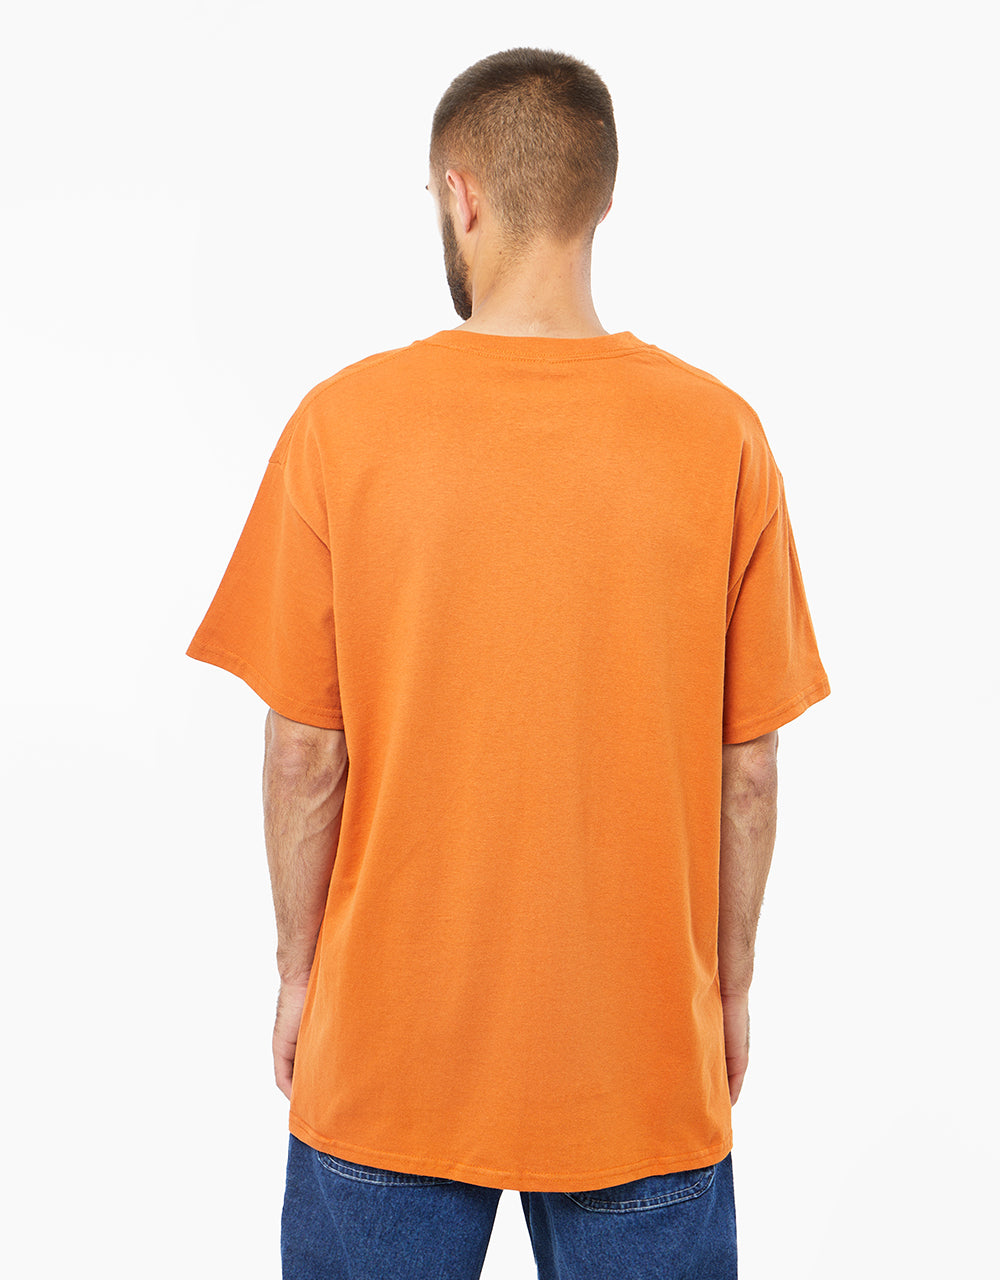 Krooked Sweatpants T-Shirt - Orange/Multi